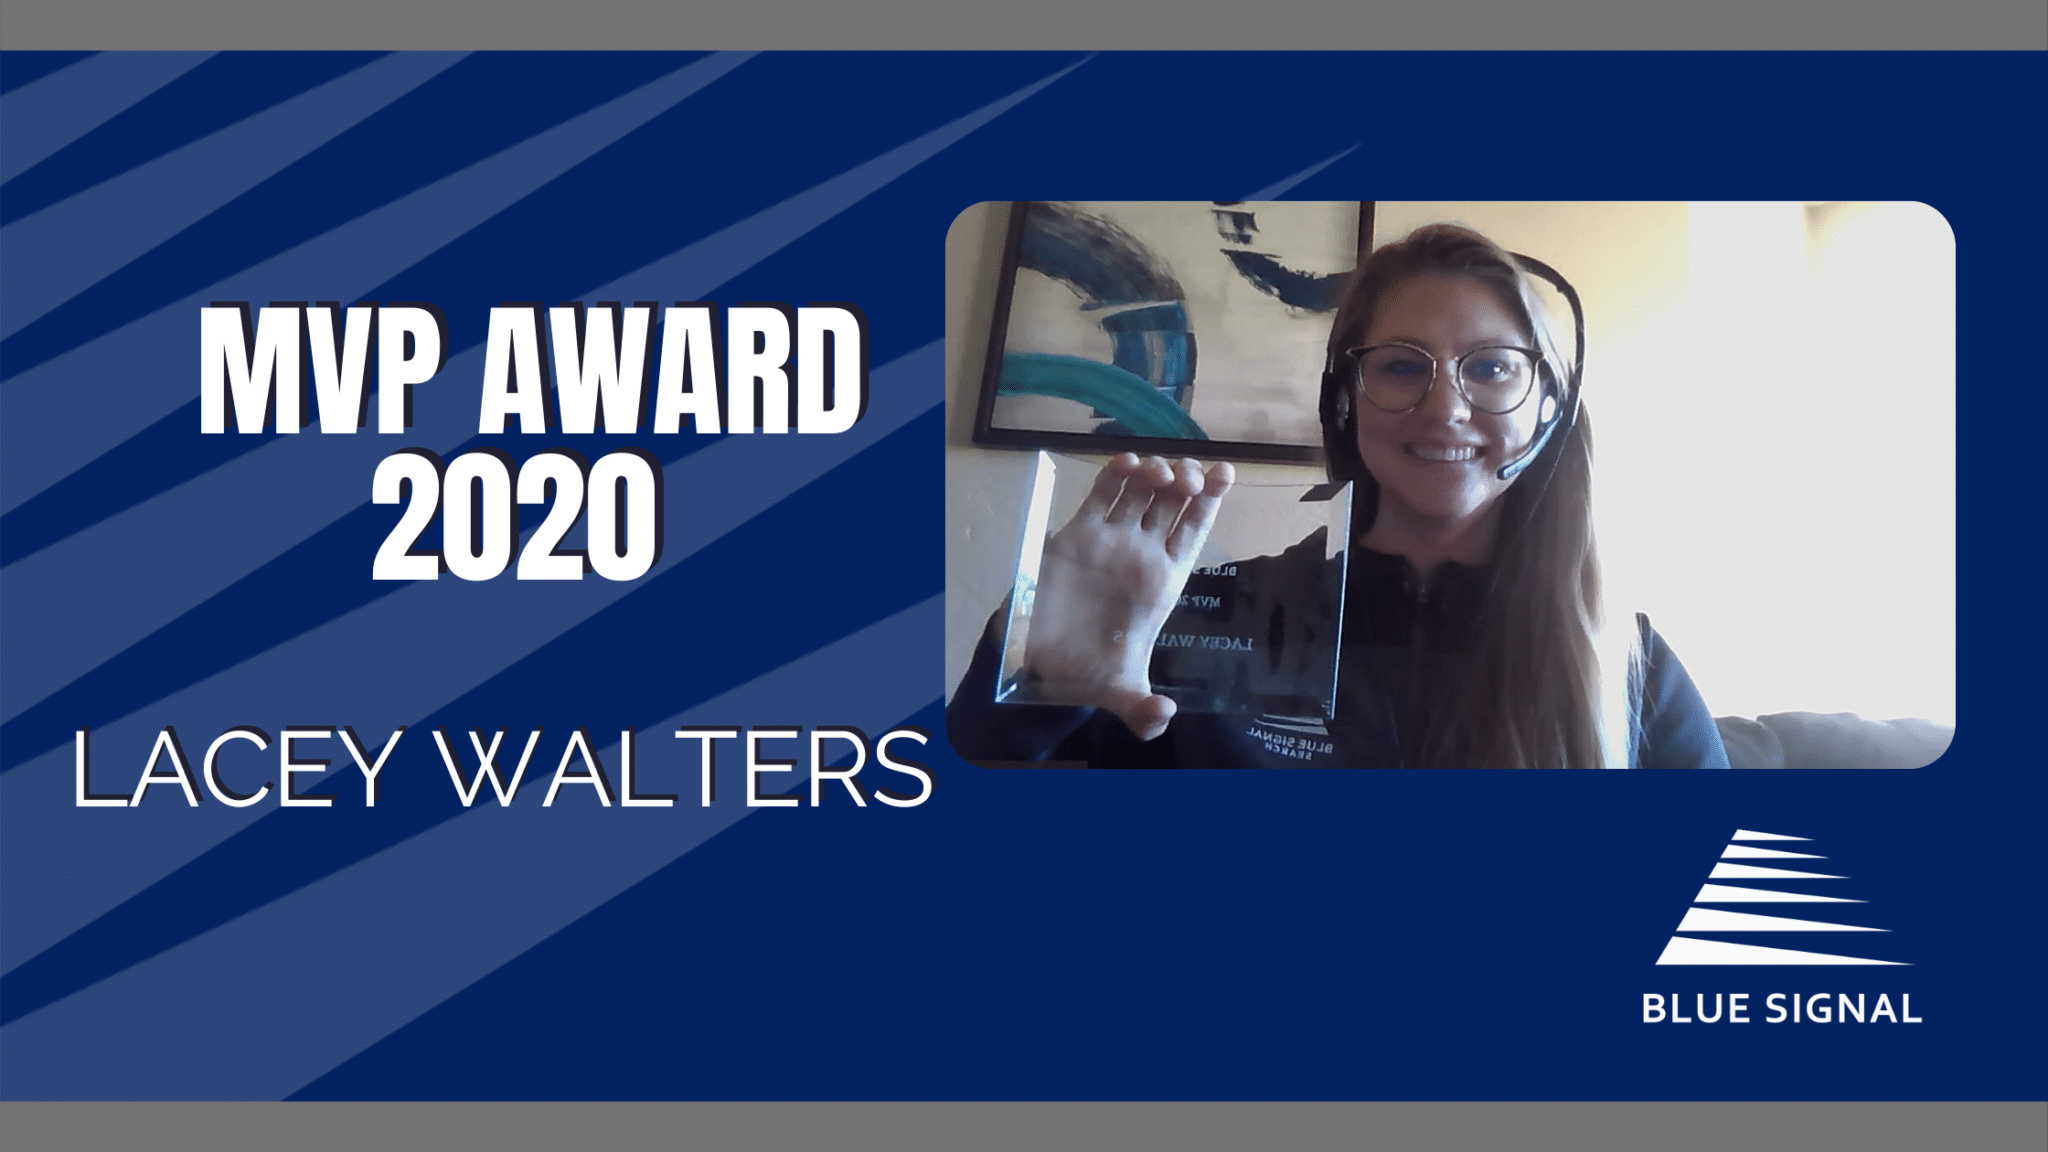 MVP Award 2020 - Lacey Walters